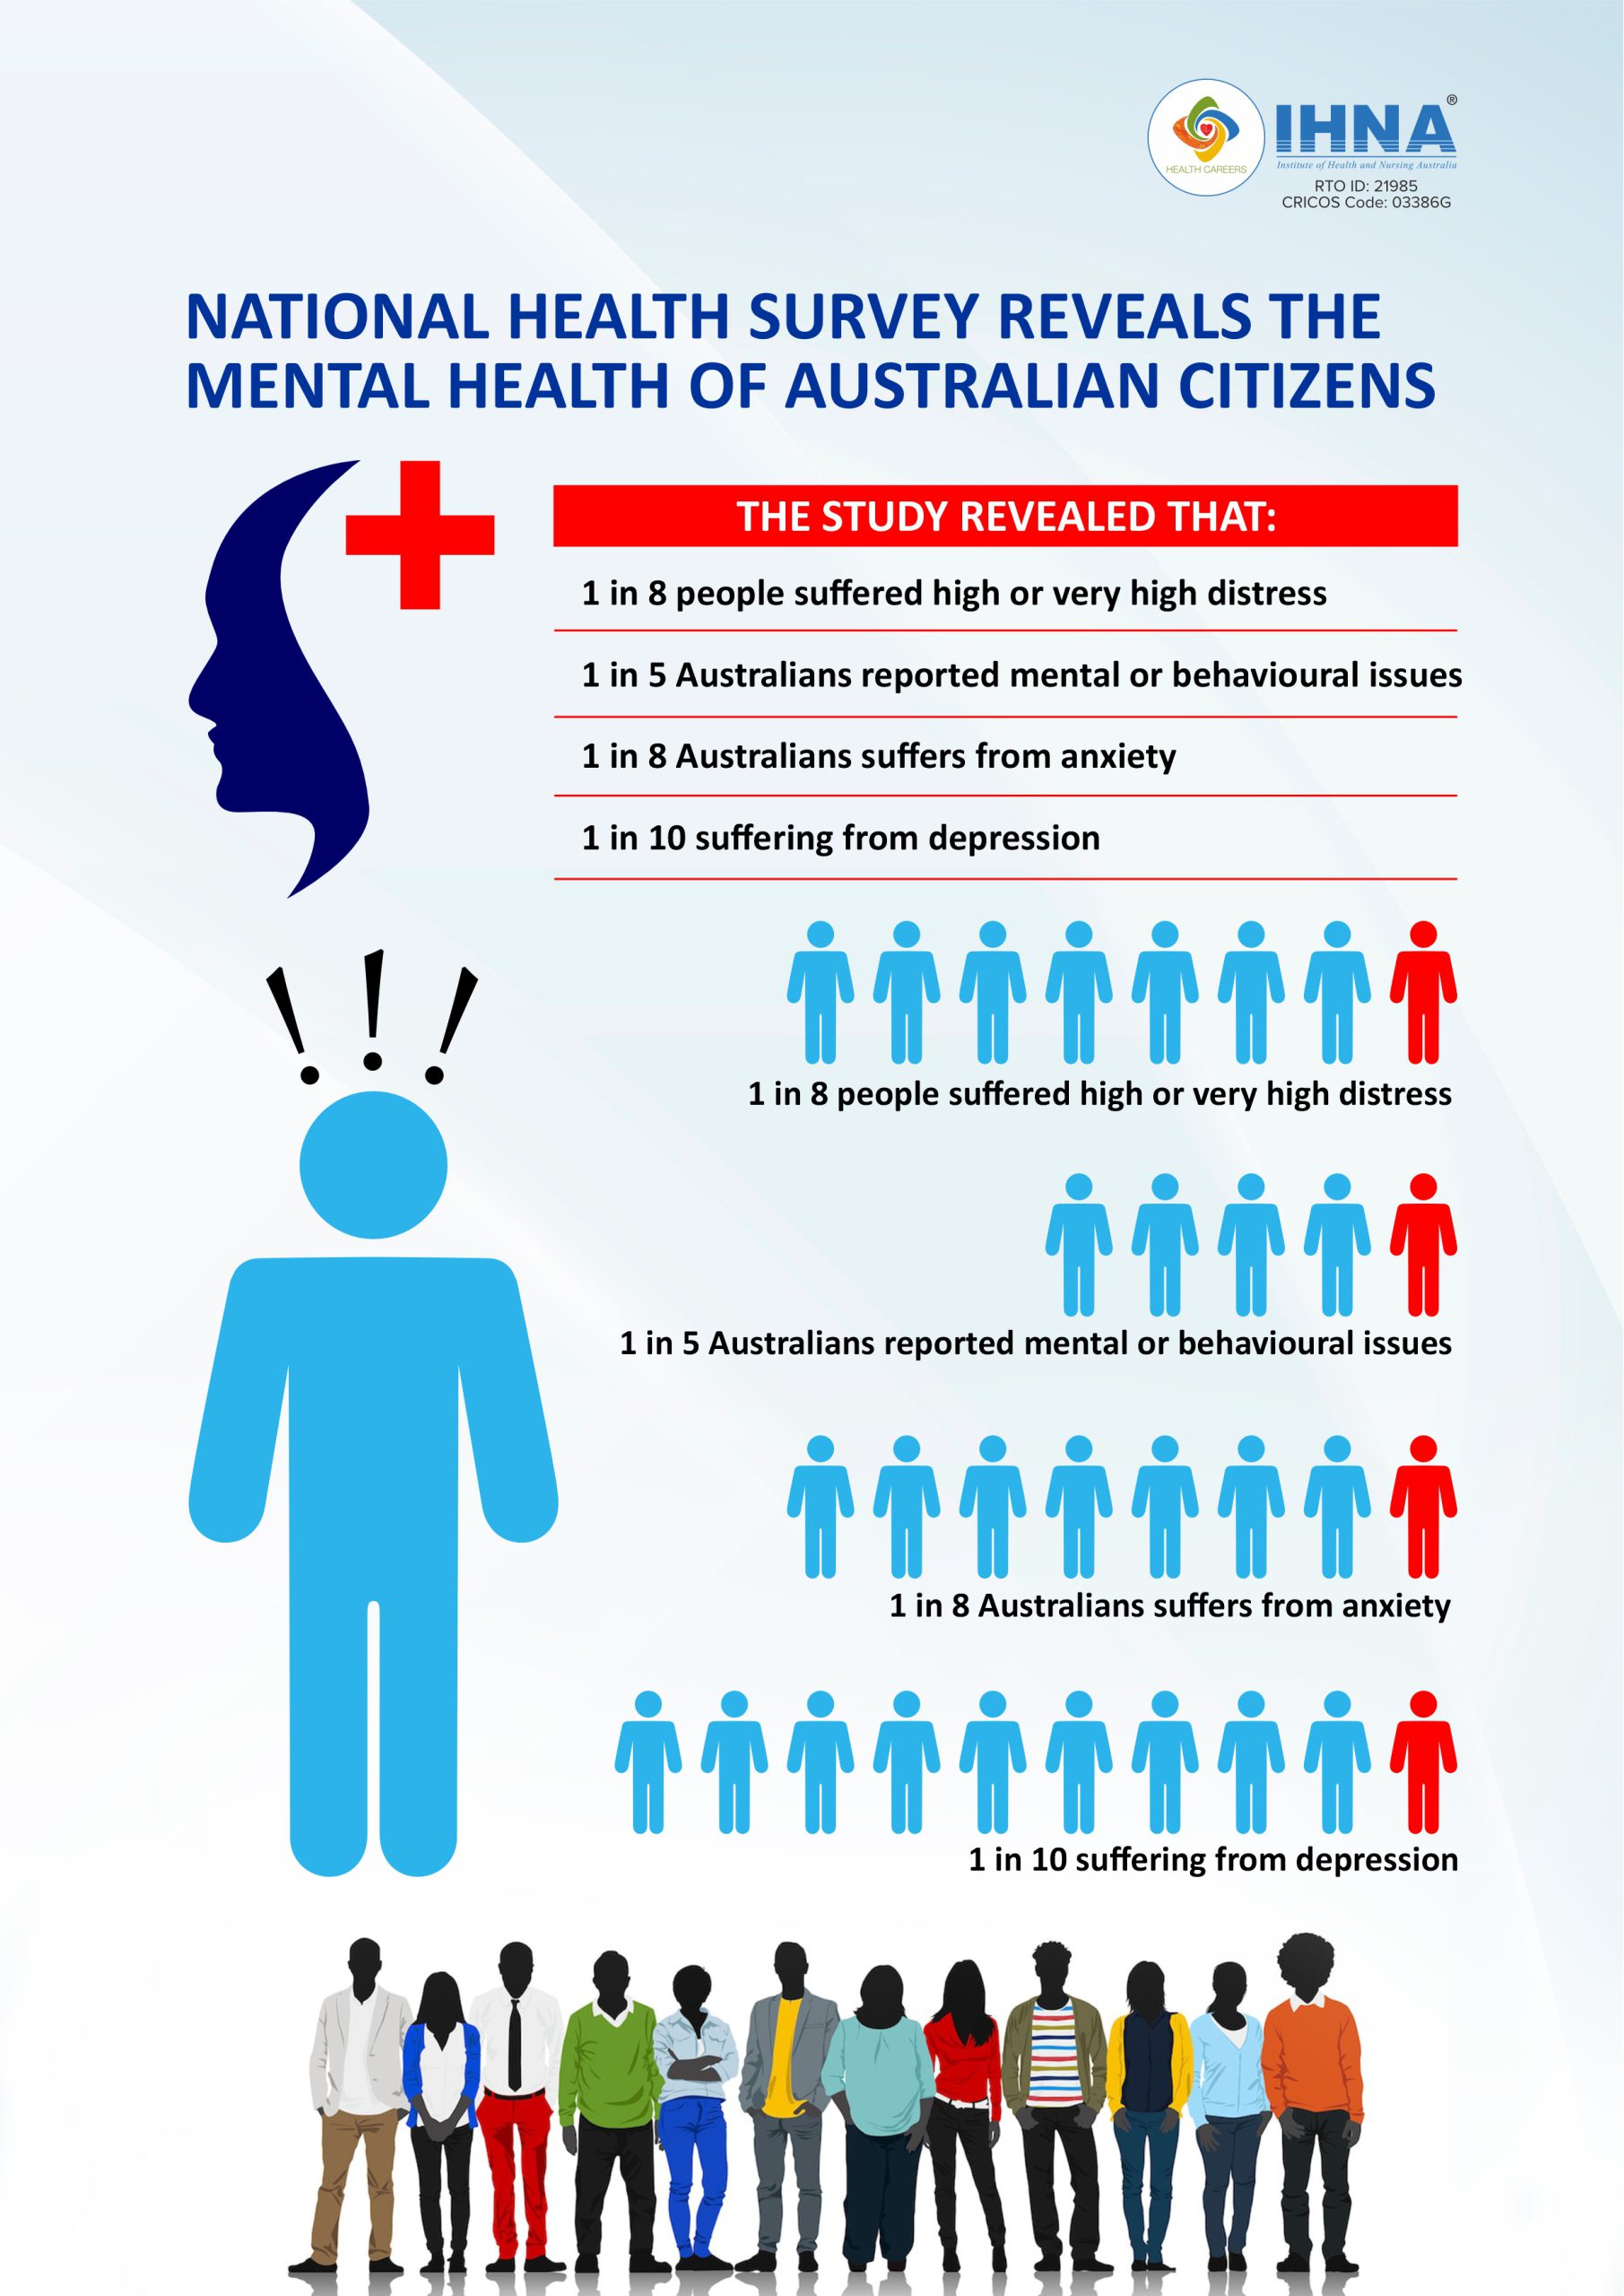 National Health Survey for Mental Health of Australian Citizens